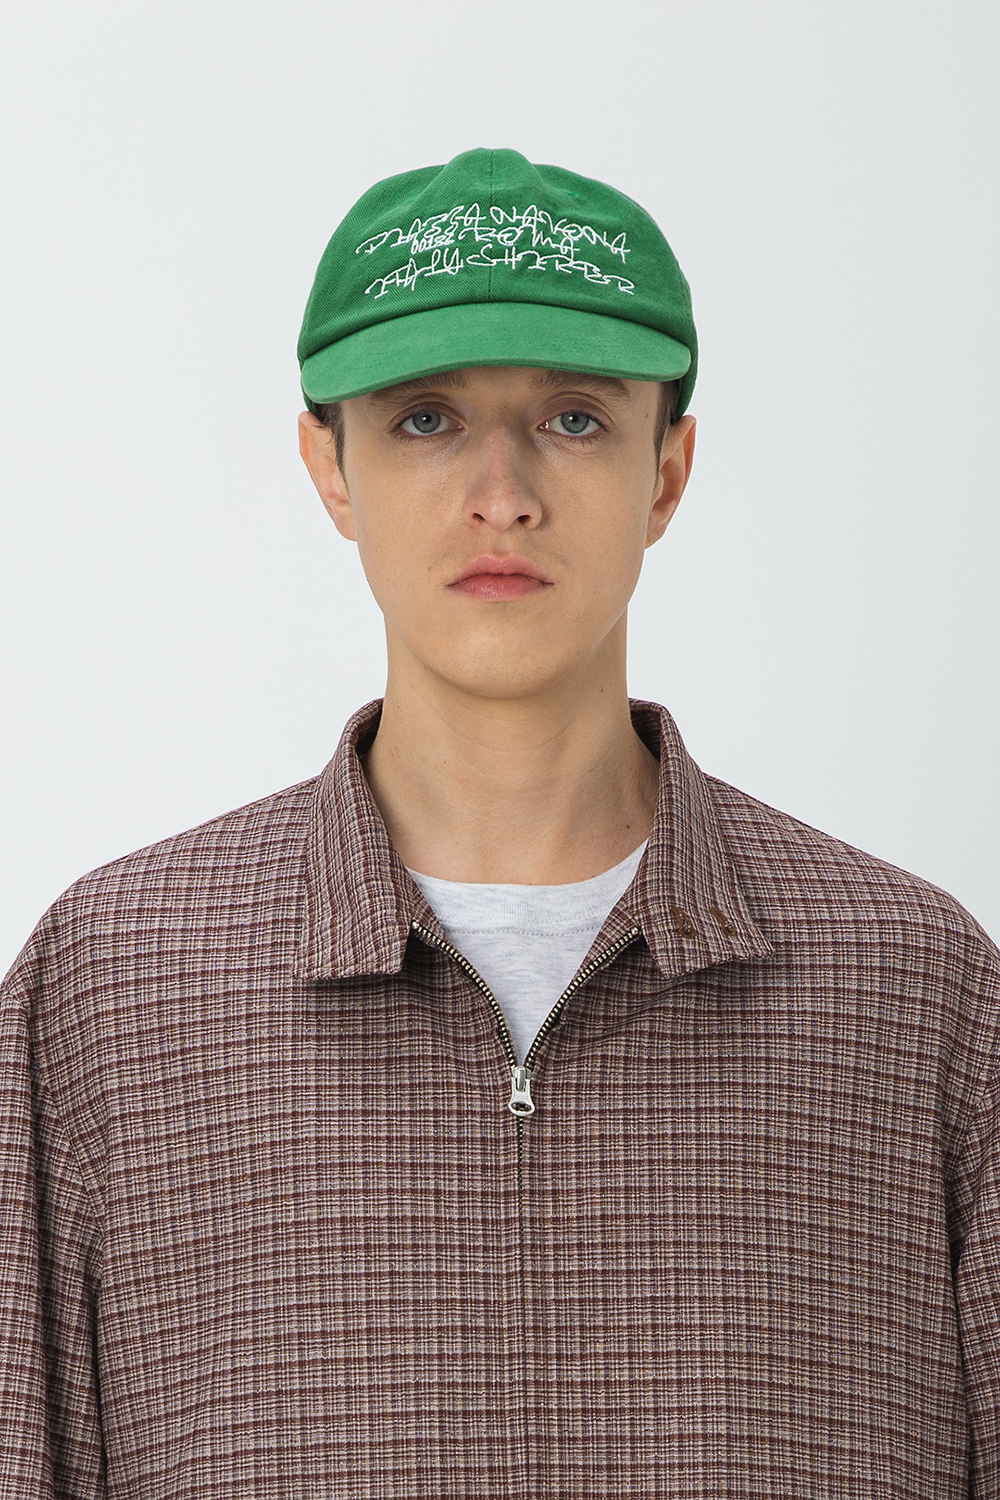 NAVONA BALL CAP (GREEN)